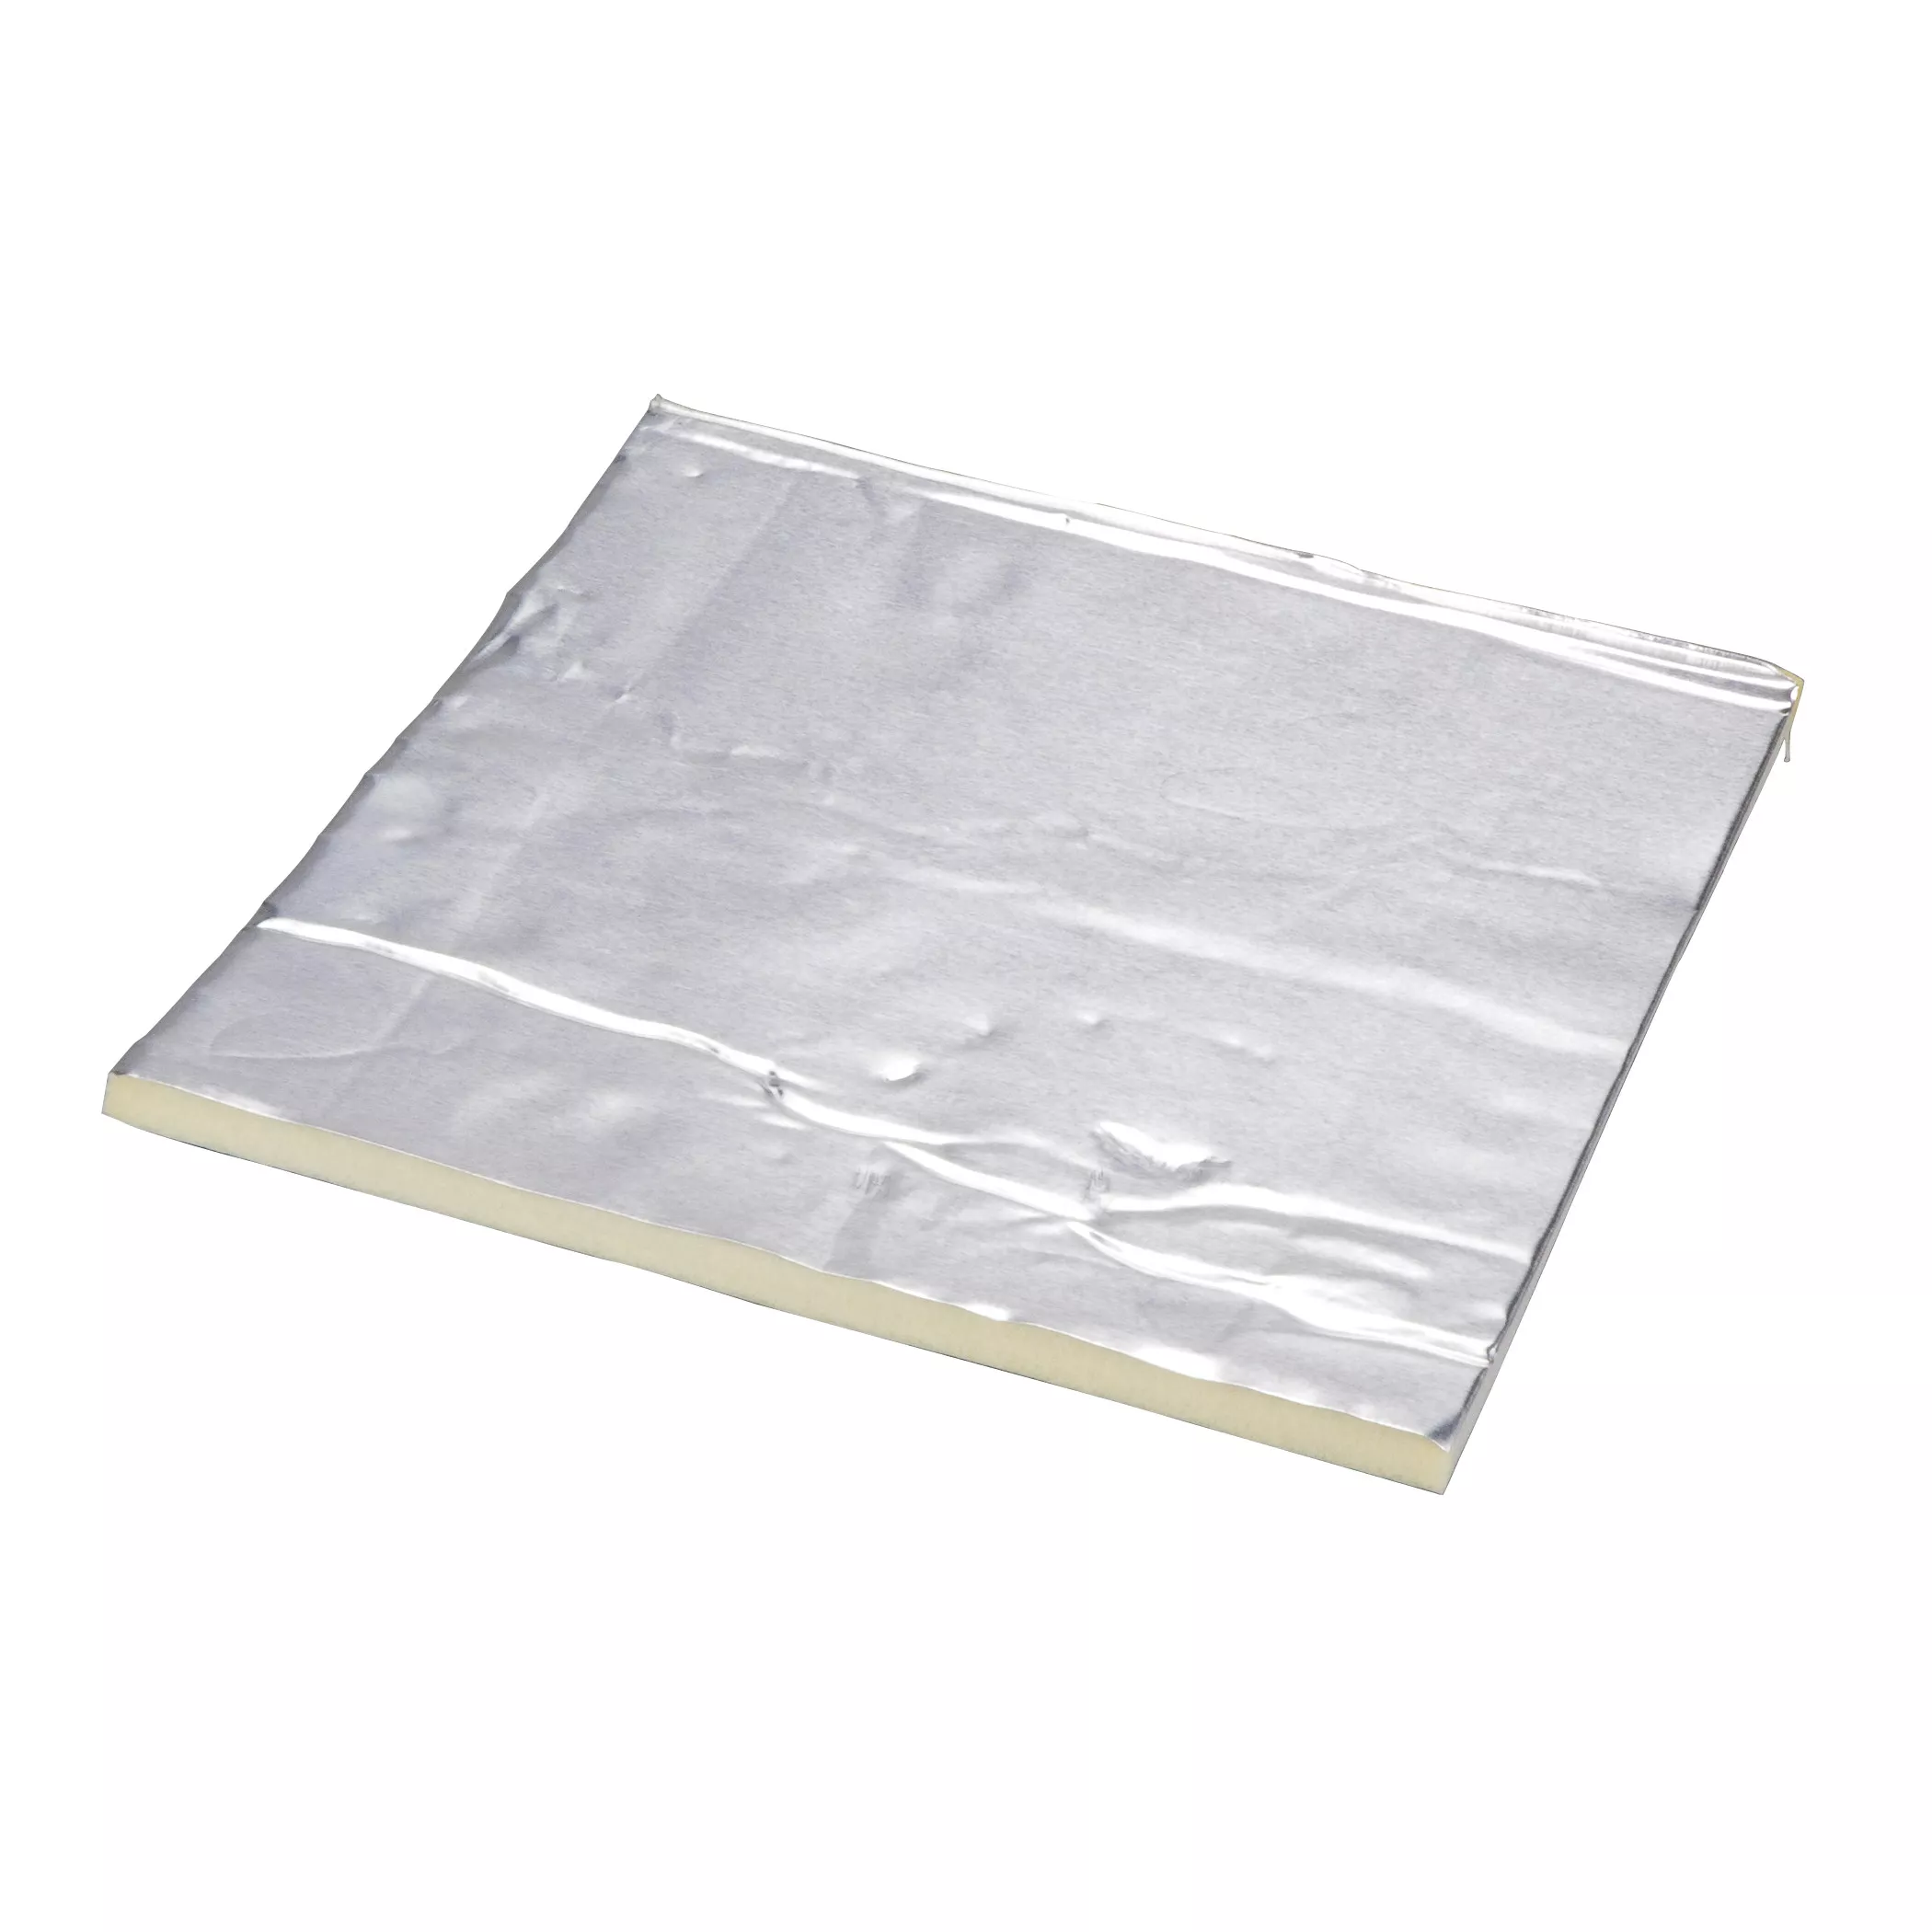 3M™ Damping Aluminum Foam Sheets 4014, Silver, 12 in x 48 in, 250 mil,
(1 pack/Case) 25 Sheet/Case